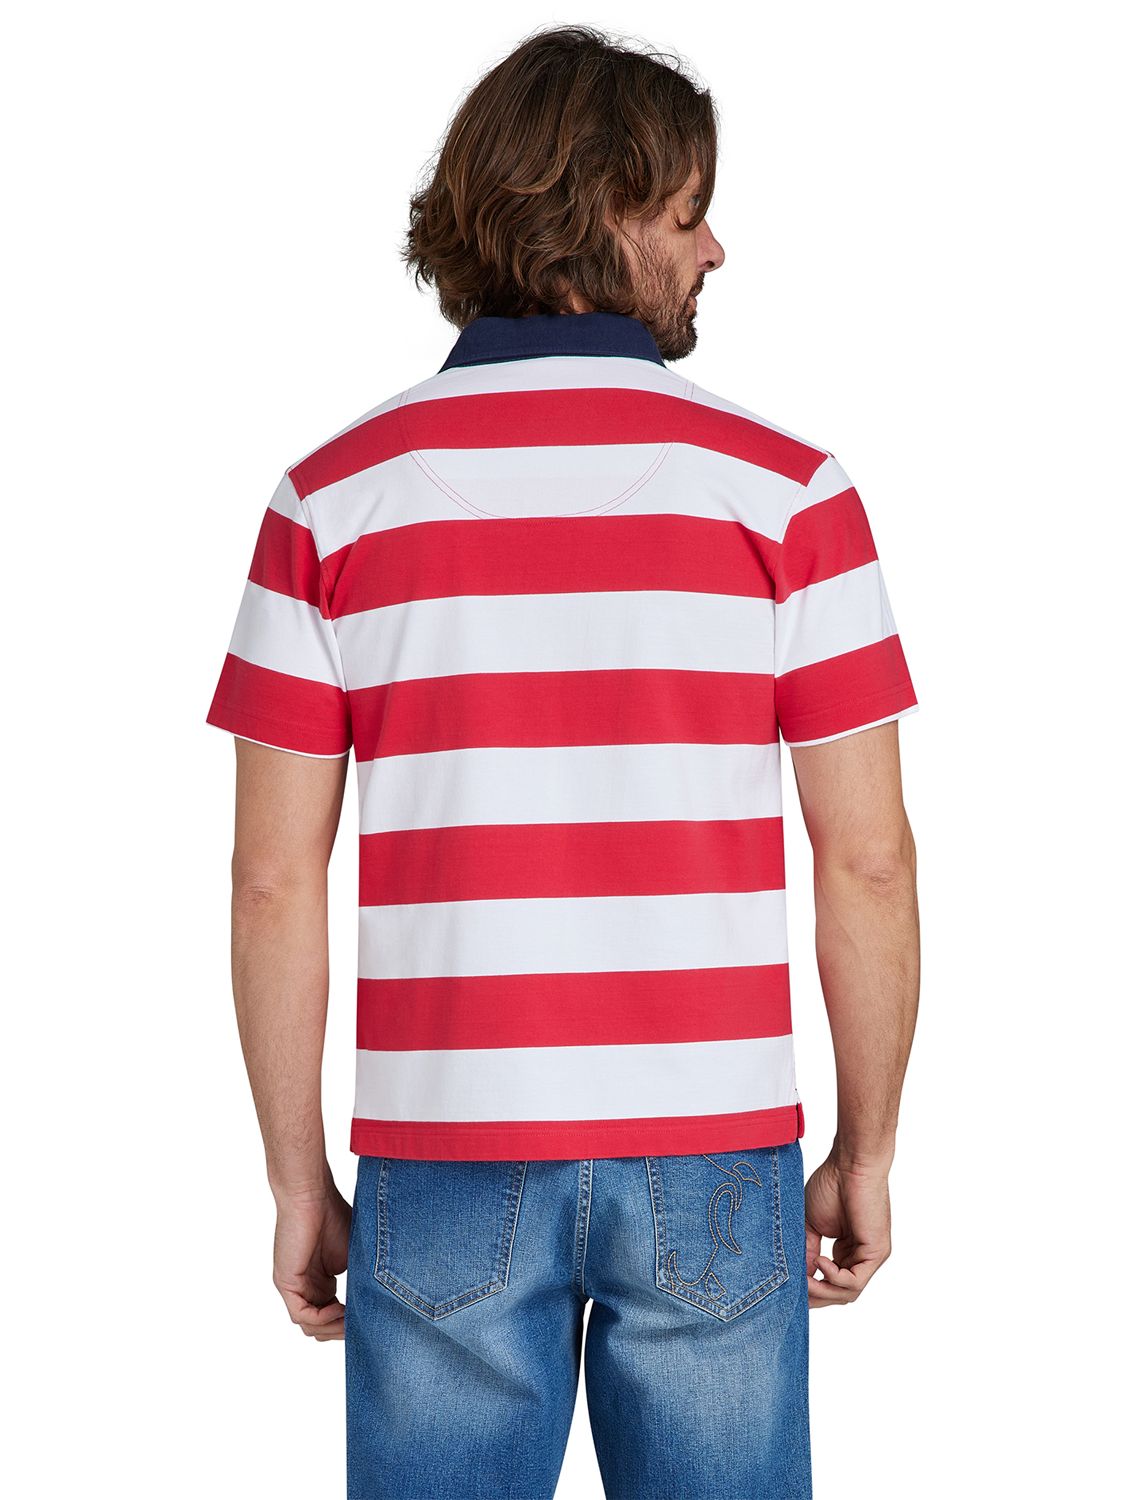 Raging Bull Short Sleeve Hooped Rugby Shirt, Watermelon/White, XXXXXL